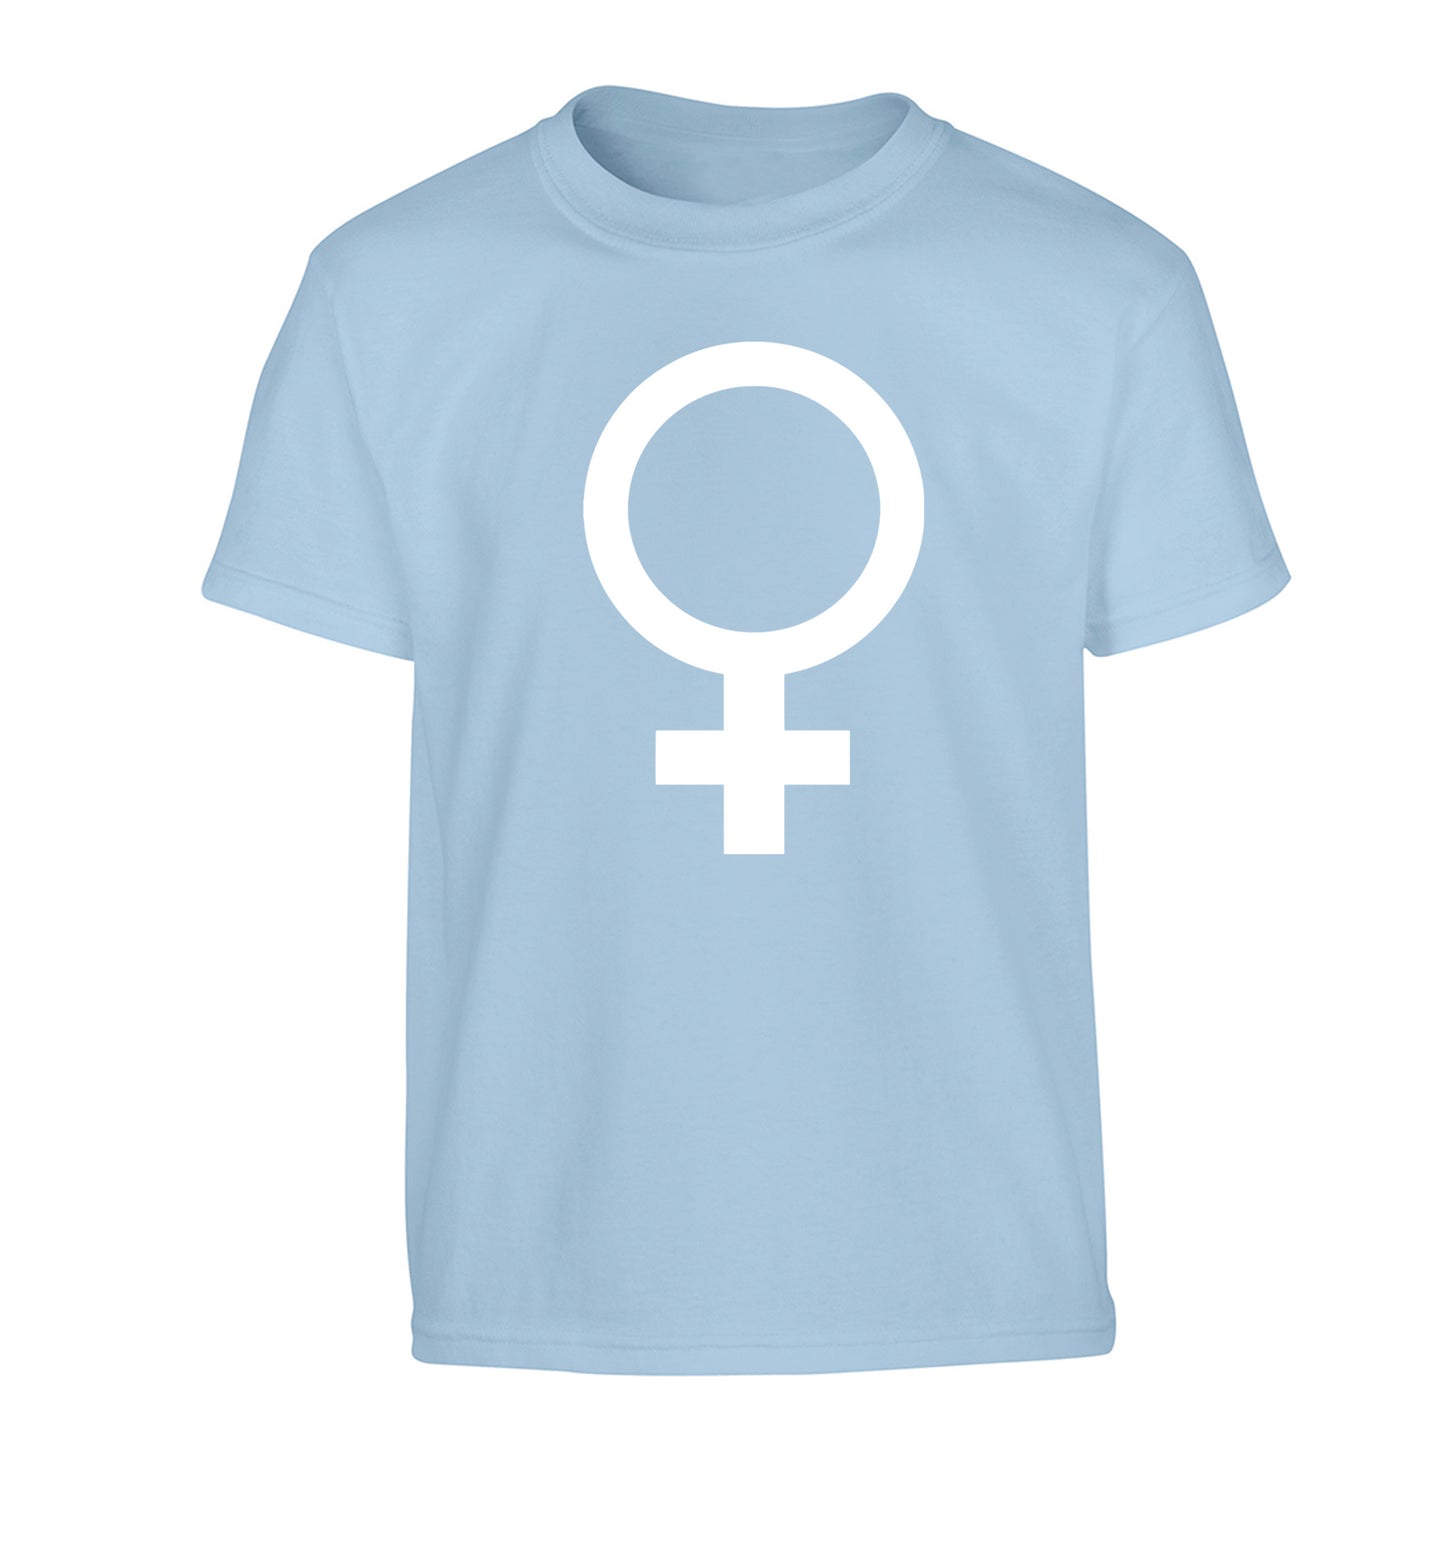 Female symbol large Children's light blue Tshirt 12-14 Years